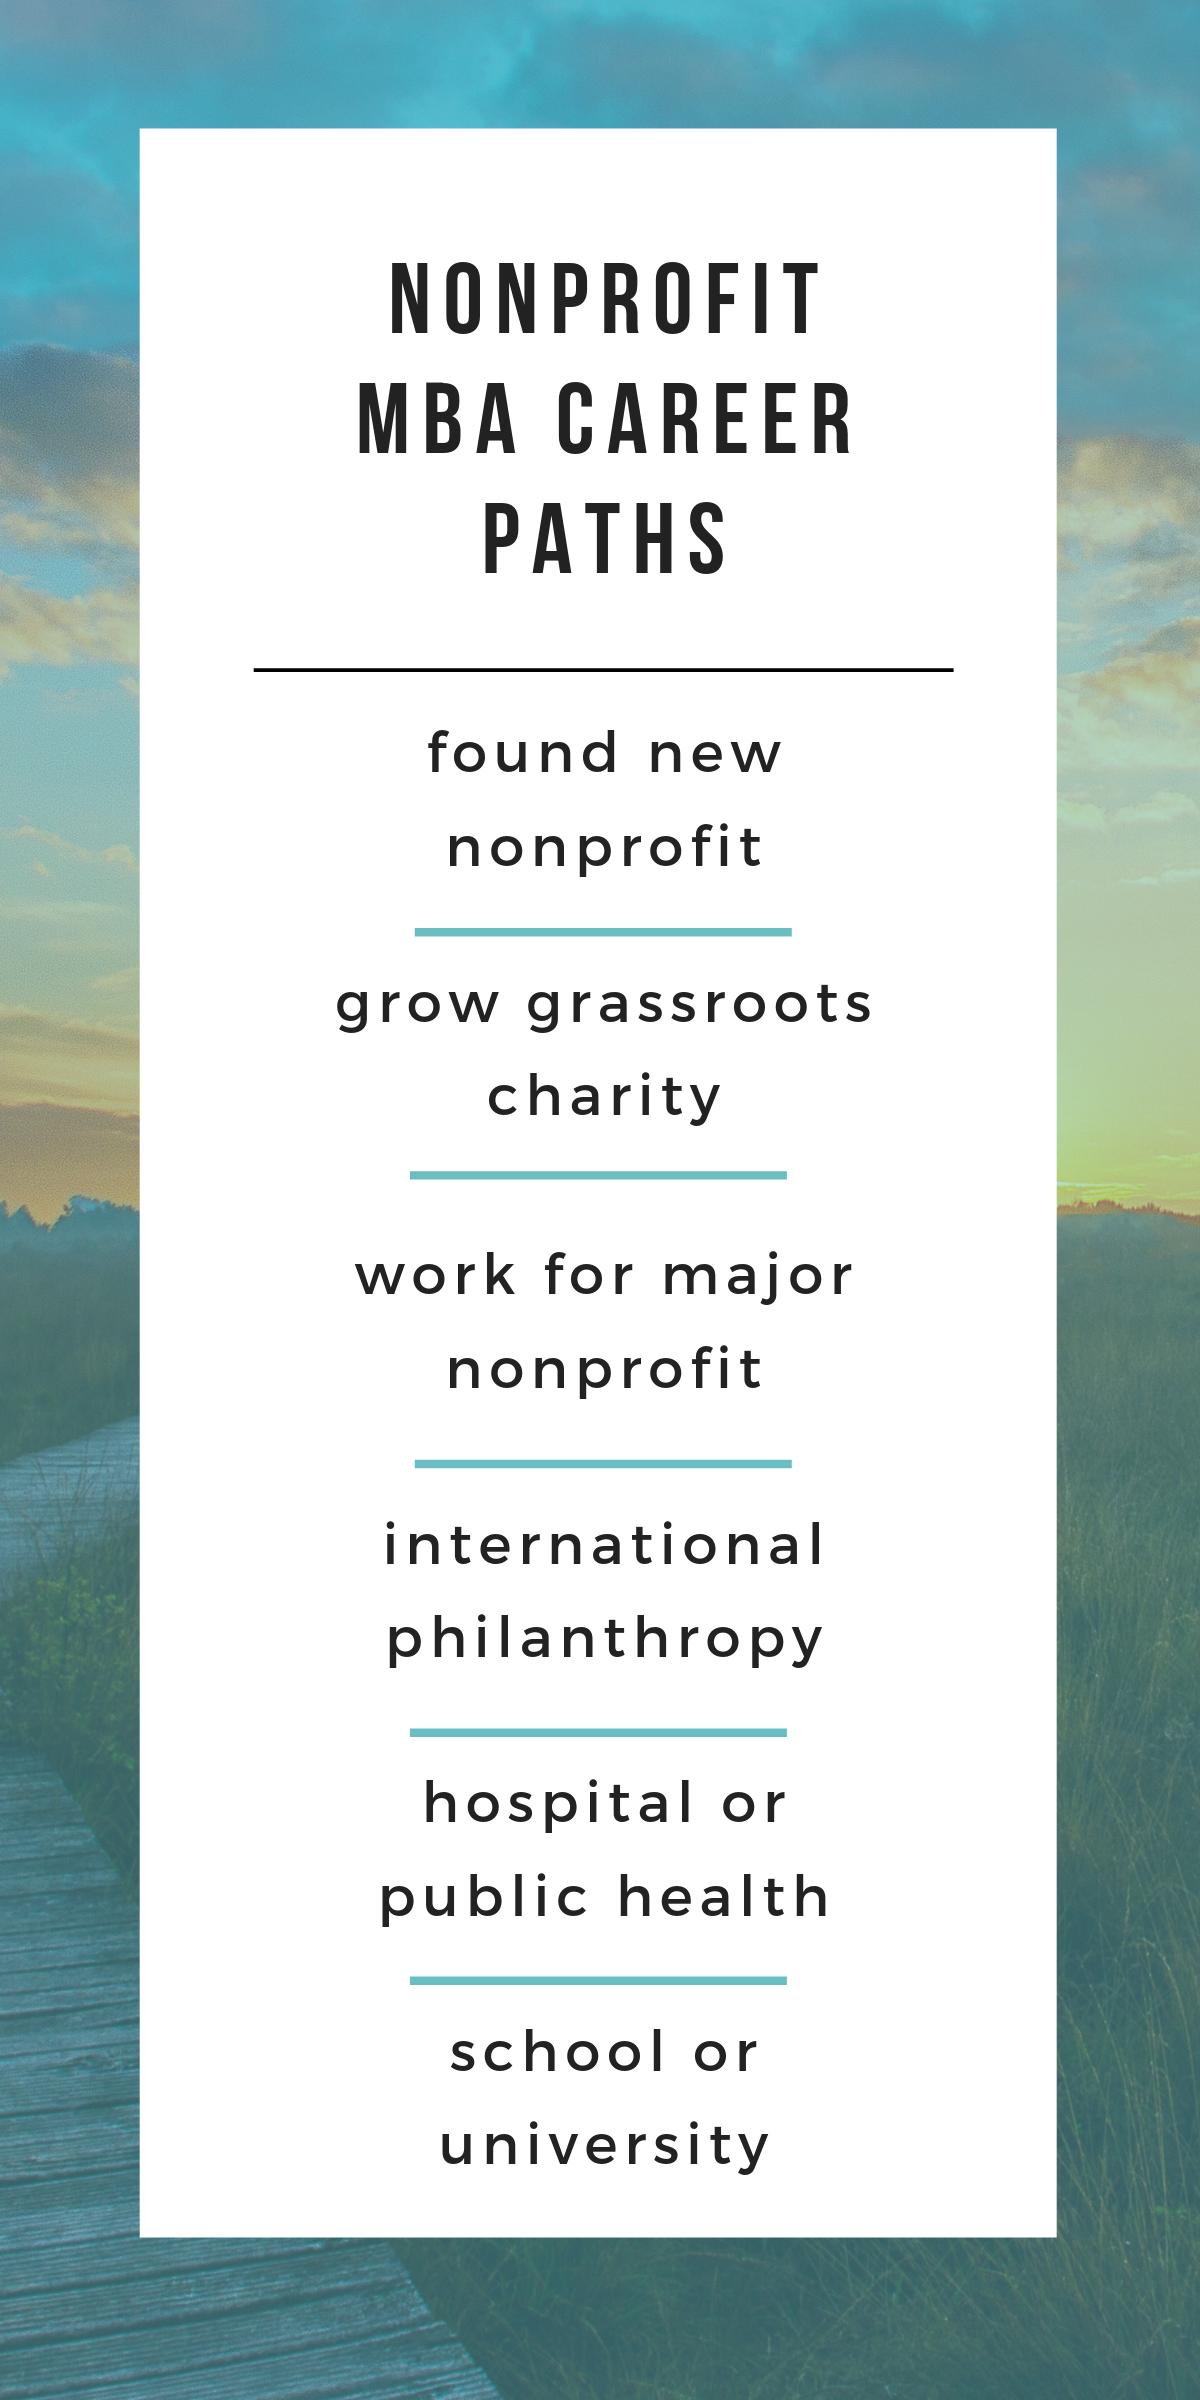 Nonprofit MBA career paths